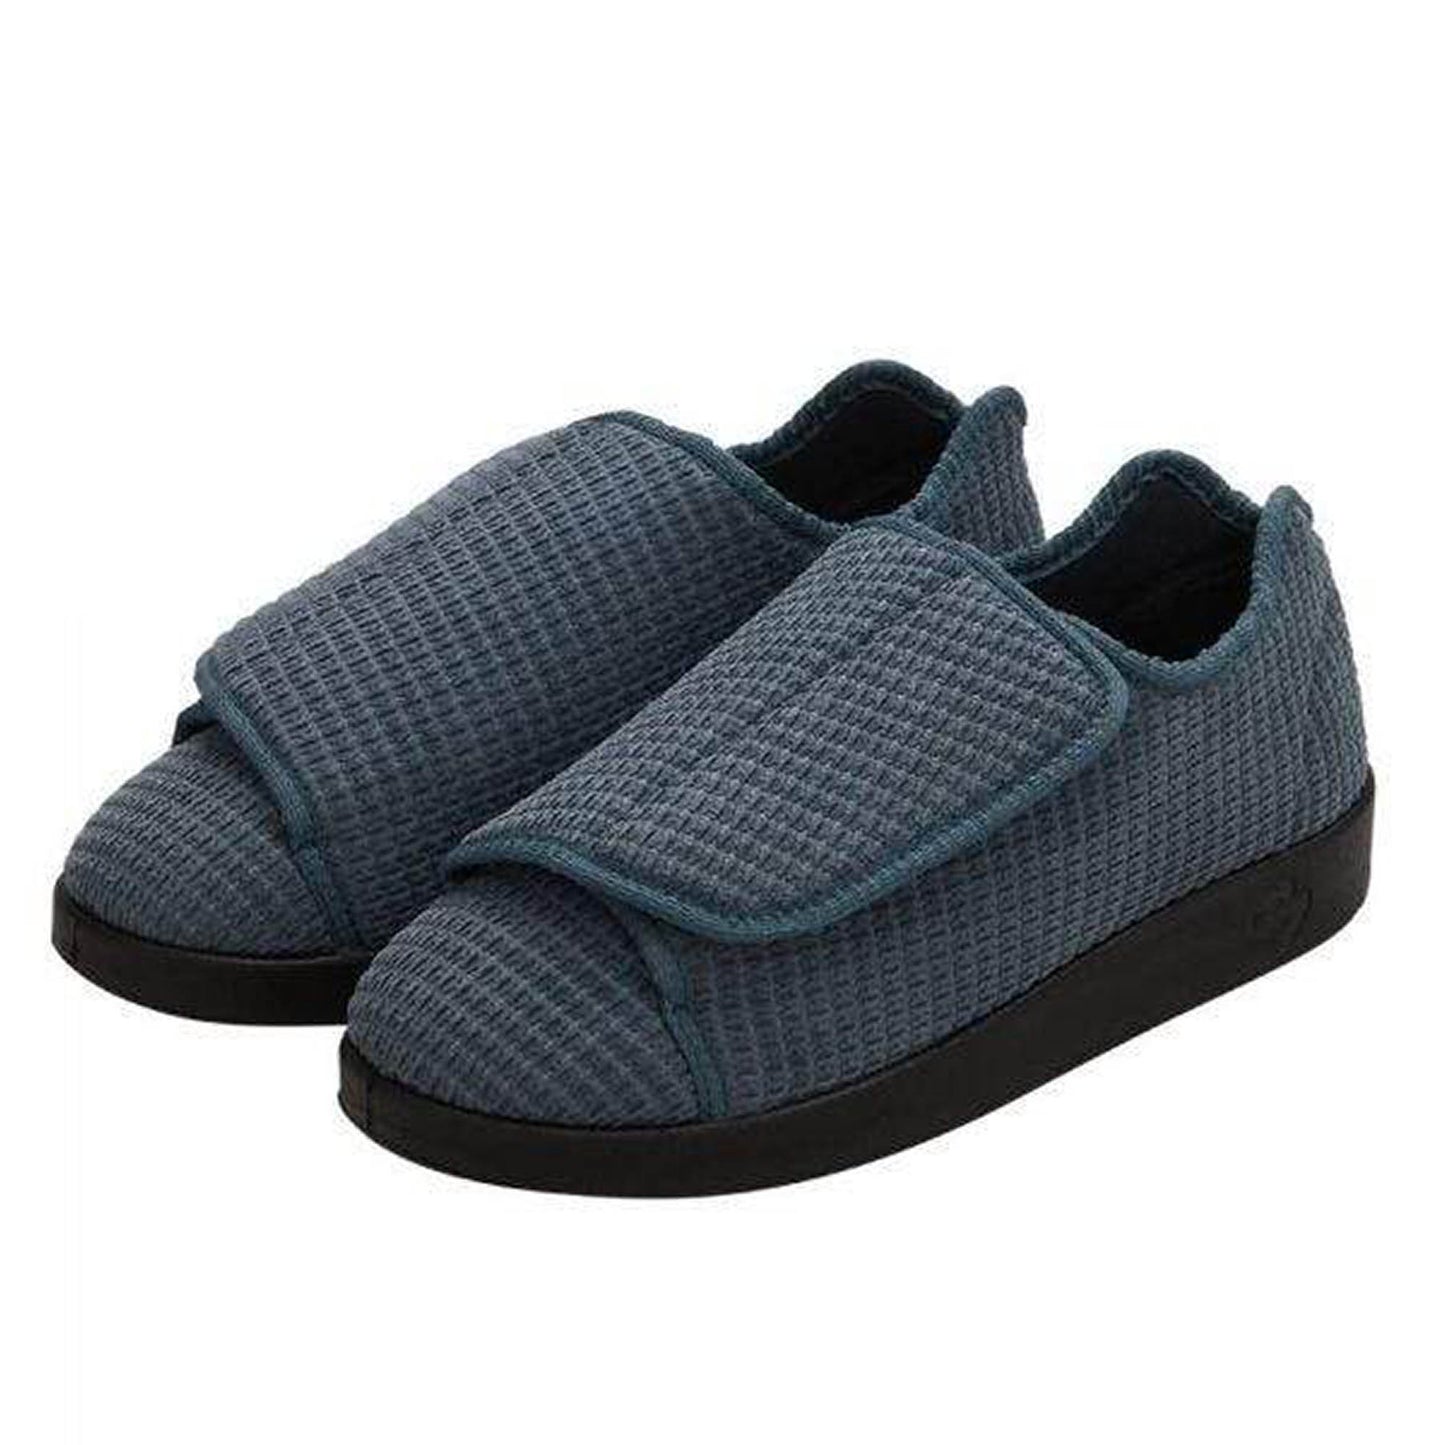 Men's Extra Extra Wide Slip-Resistant Slippers